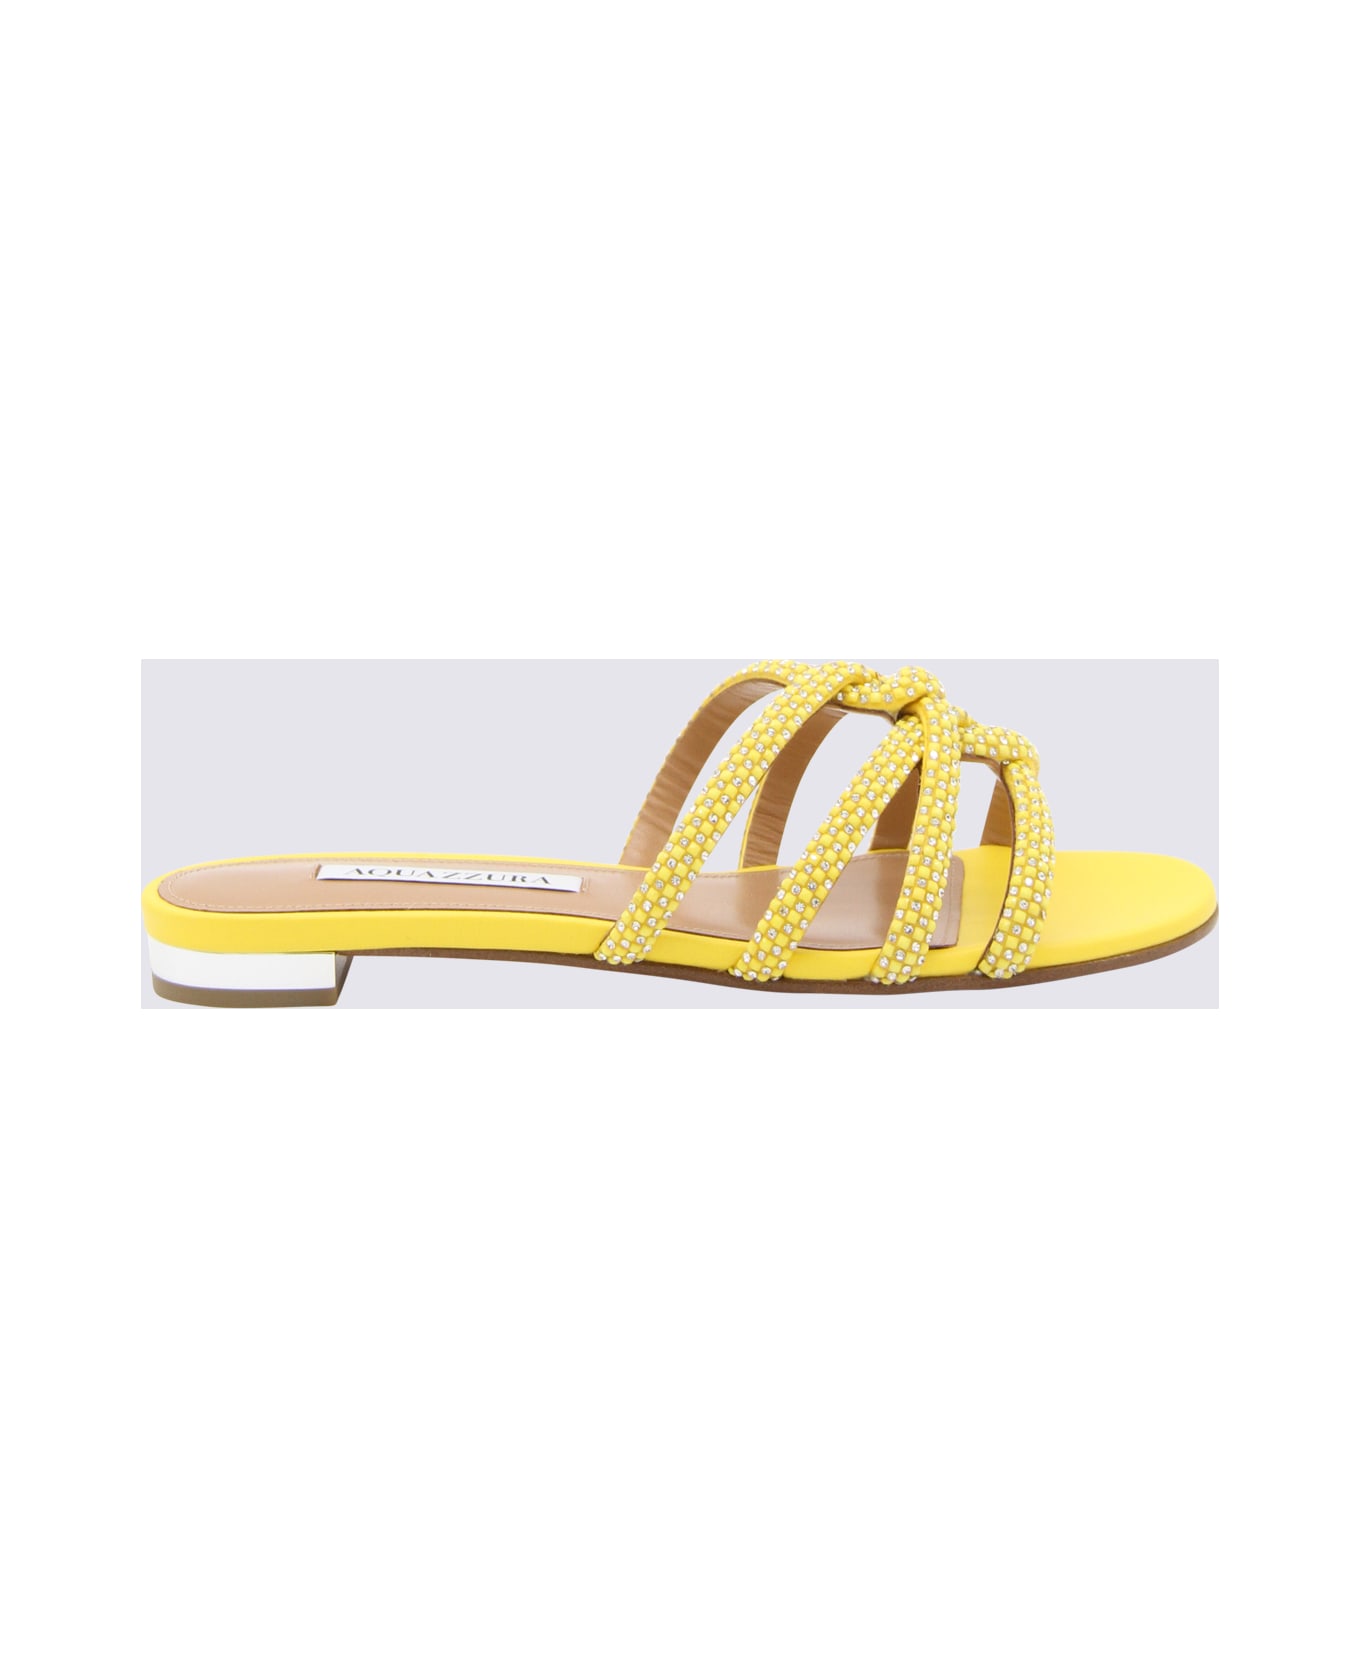 Aquazzura Yellow Leather Sandals - CITRON サンダル